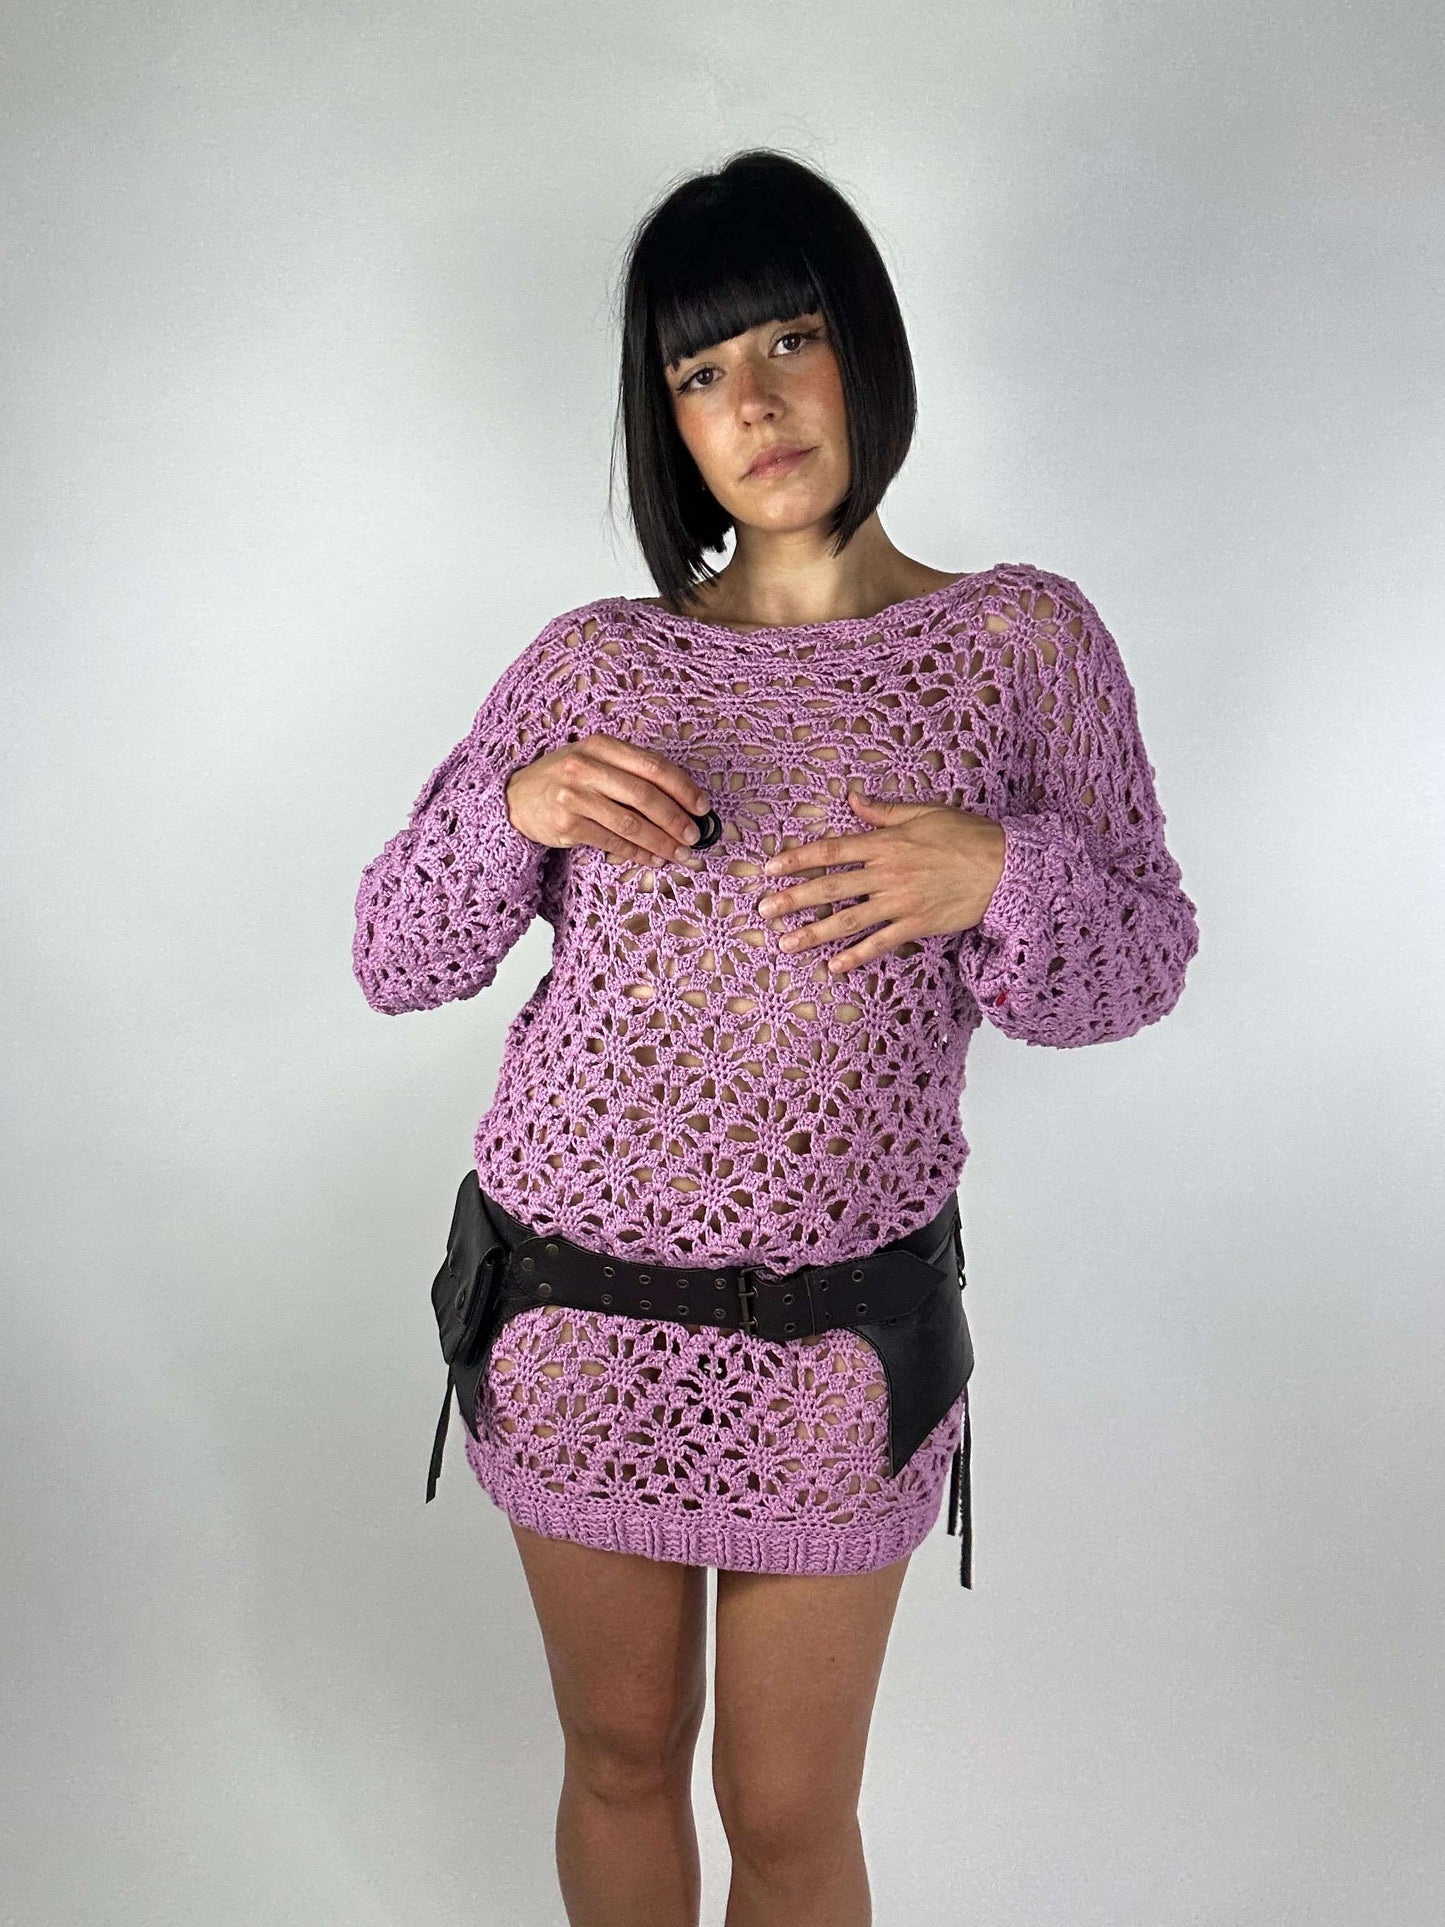 Vestido Vintage Crochet Estilo Boho Años 2000 (Estilo Gimaguas)